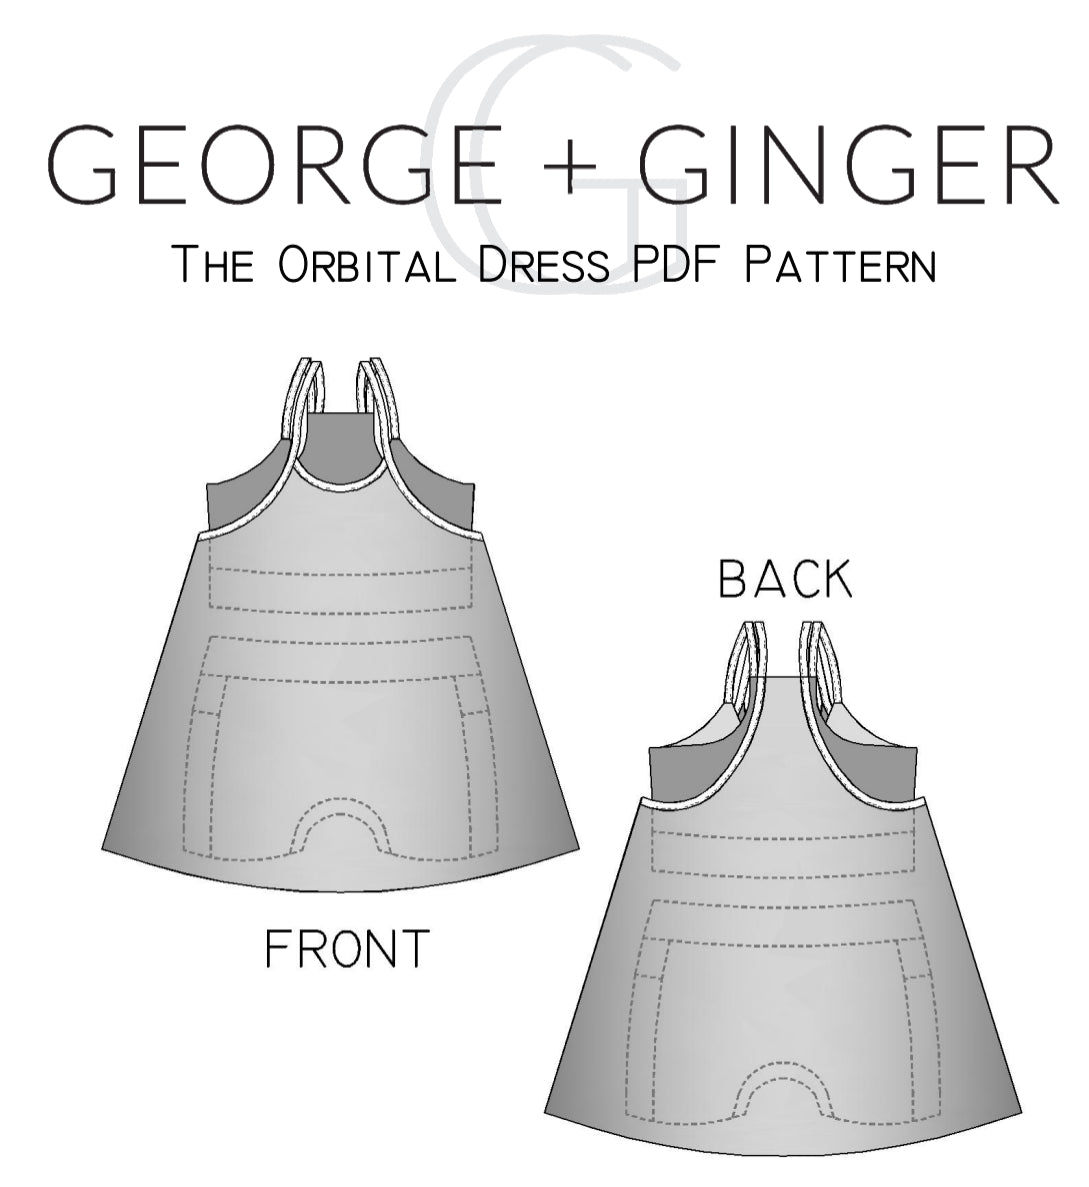 The Orbital Dress PDF Sewing Pattern